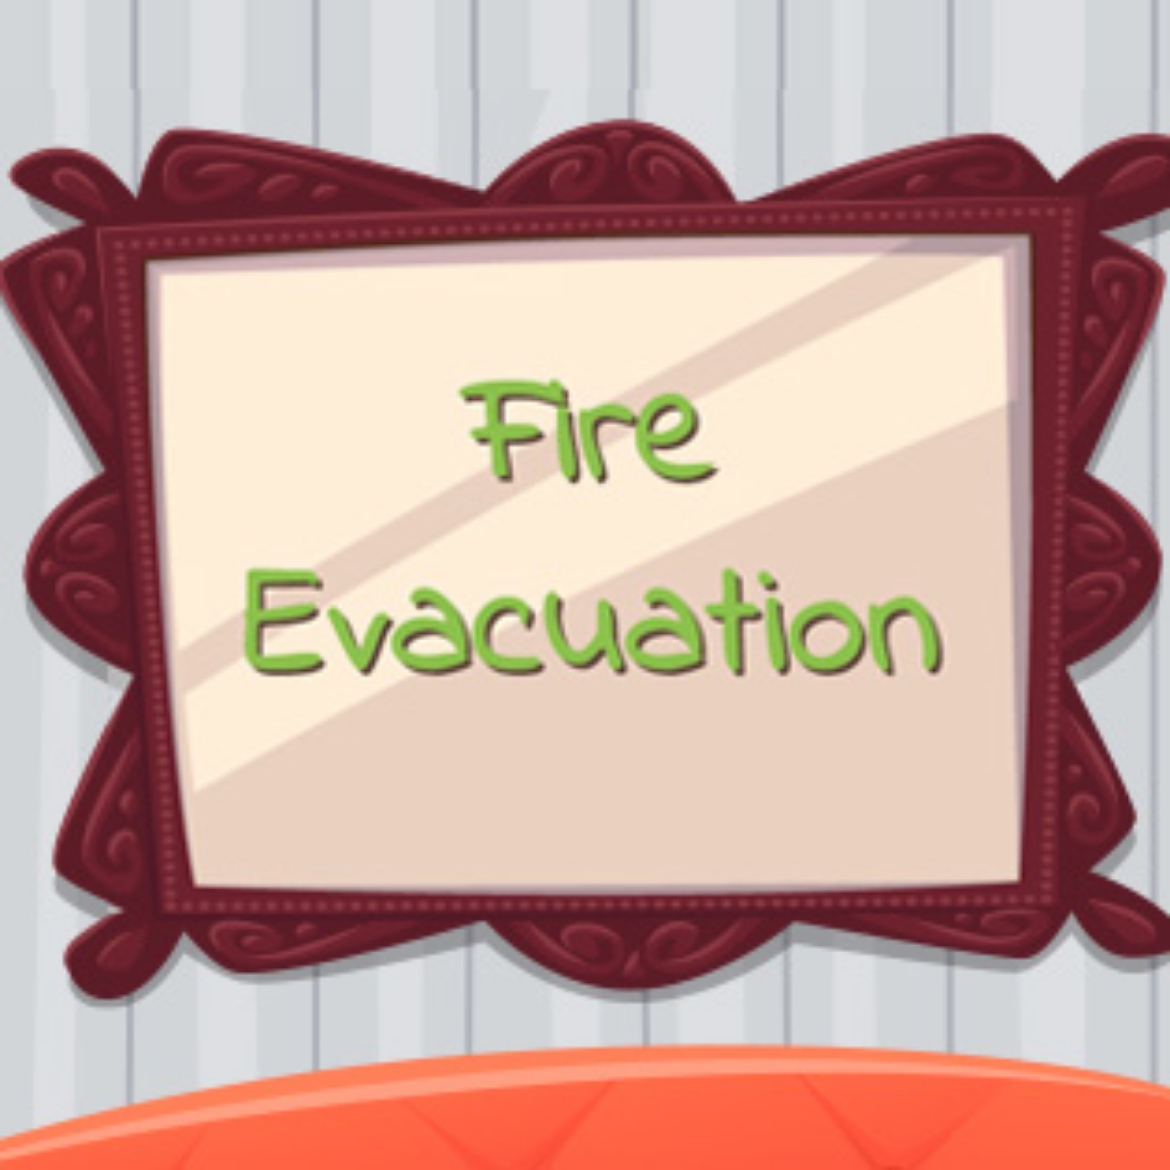 Fire Evacuation Online Training Course